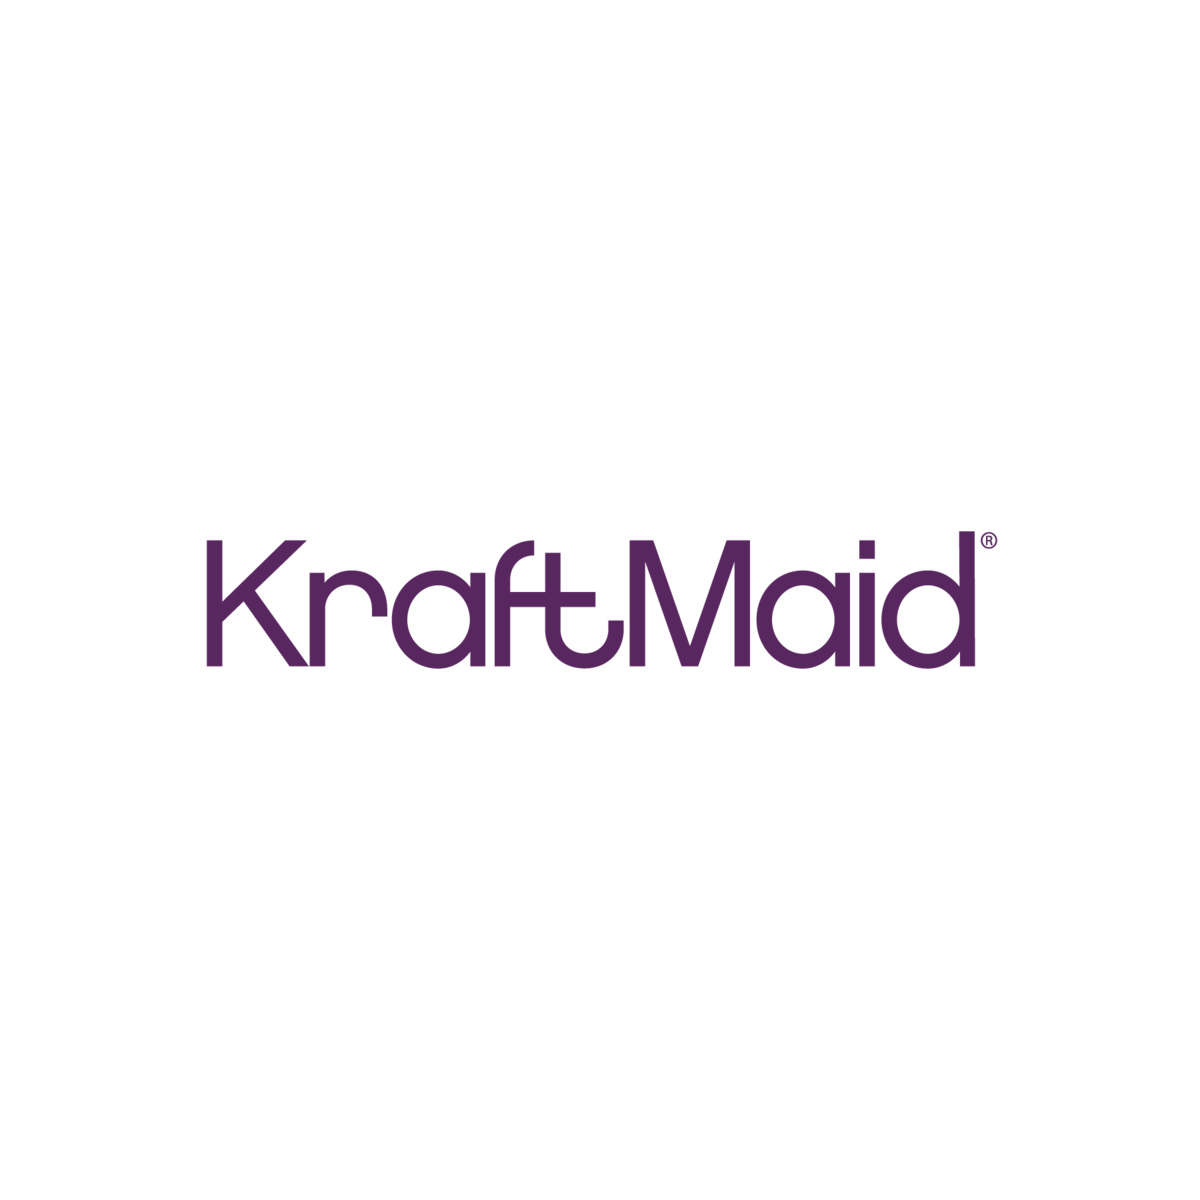 KraftMaid Logo - KraftMaid & Laramore Advertising